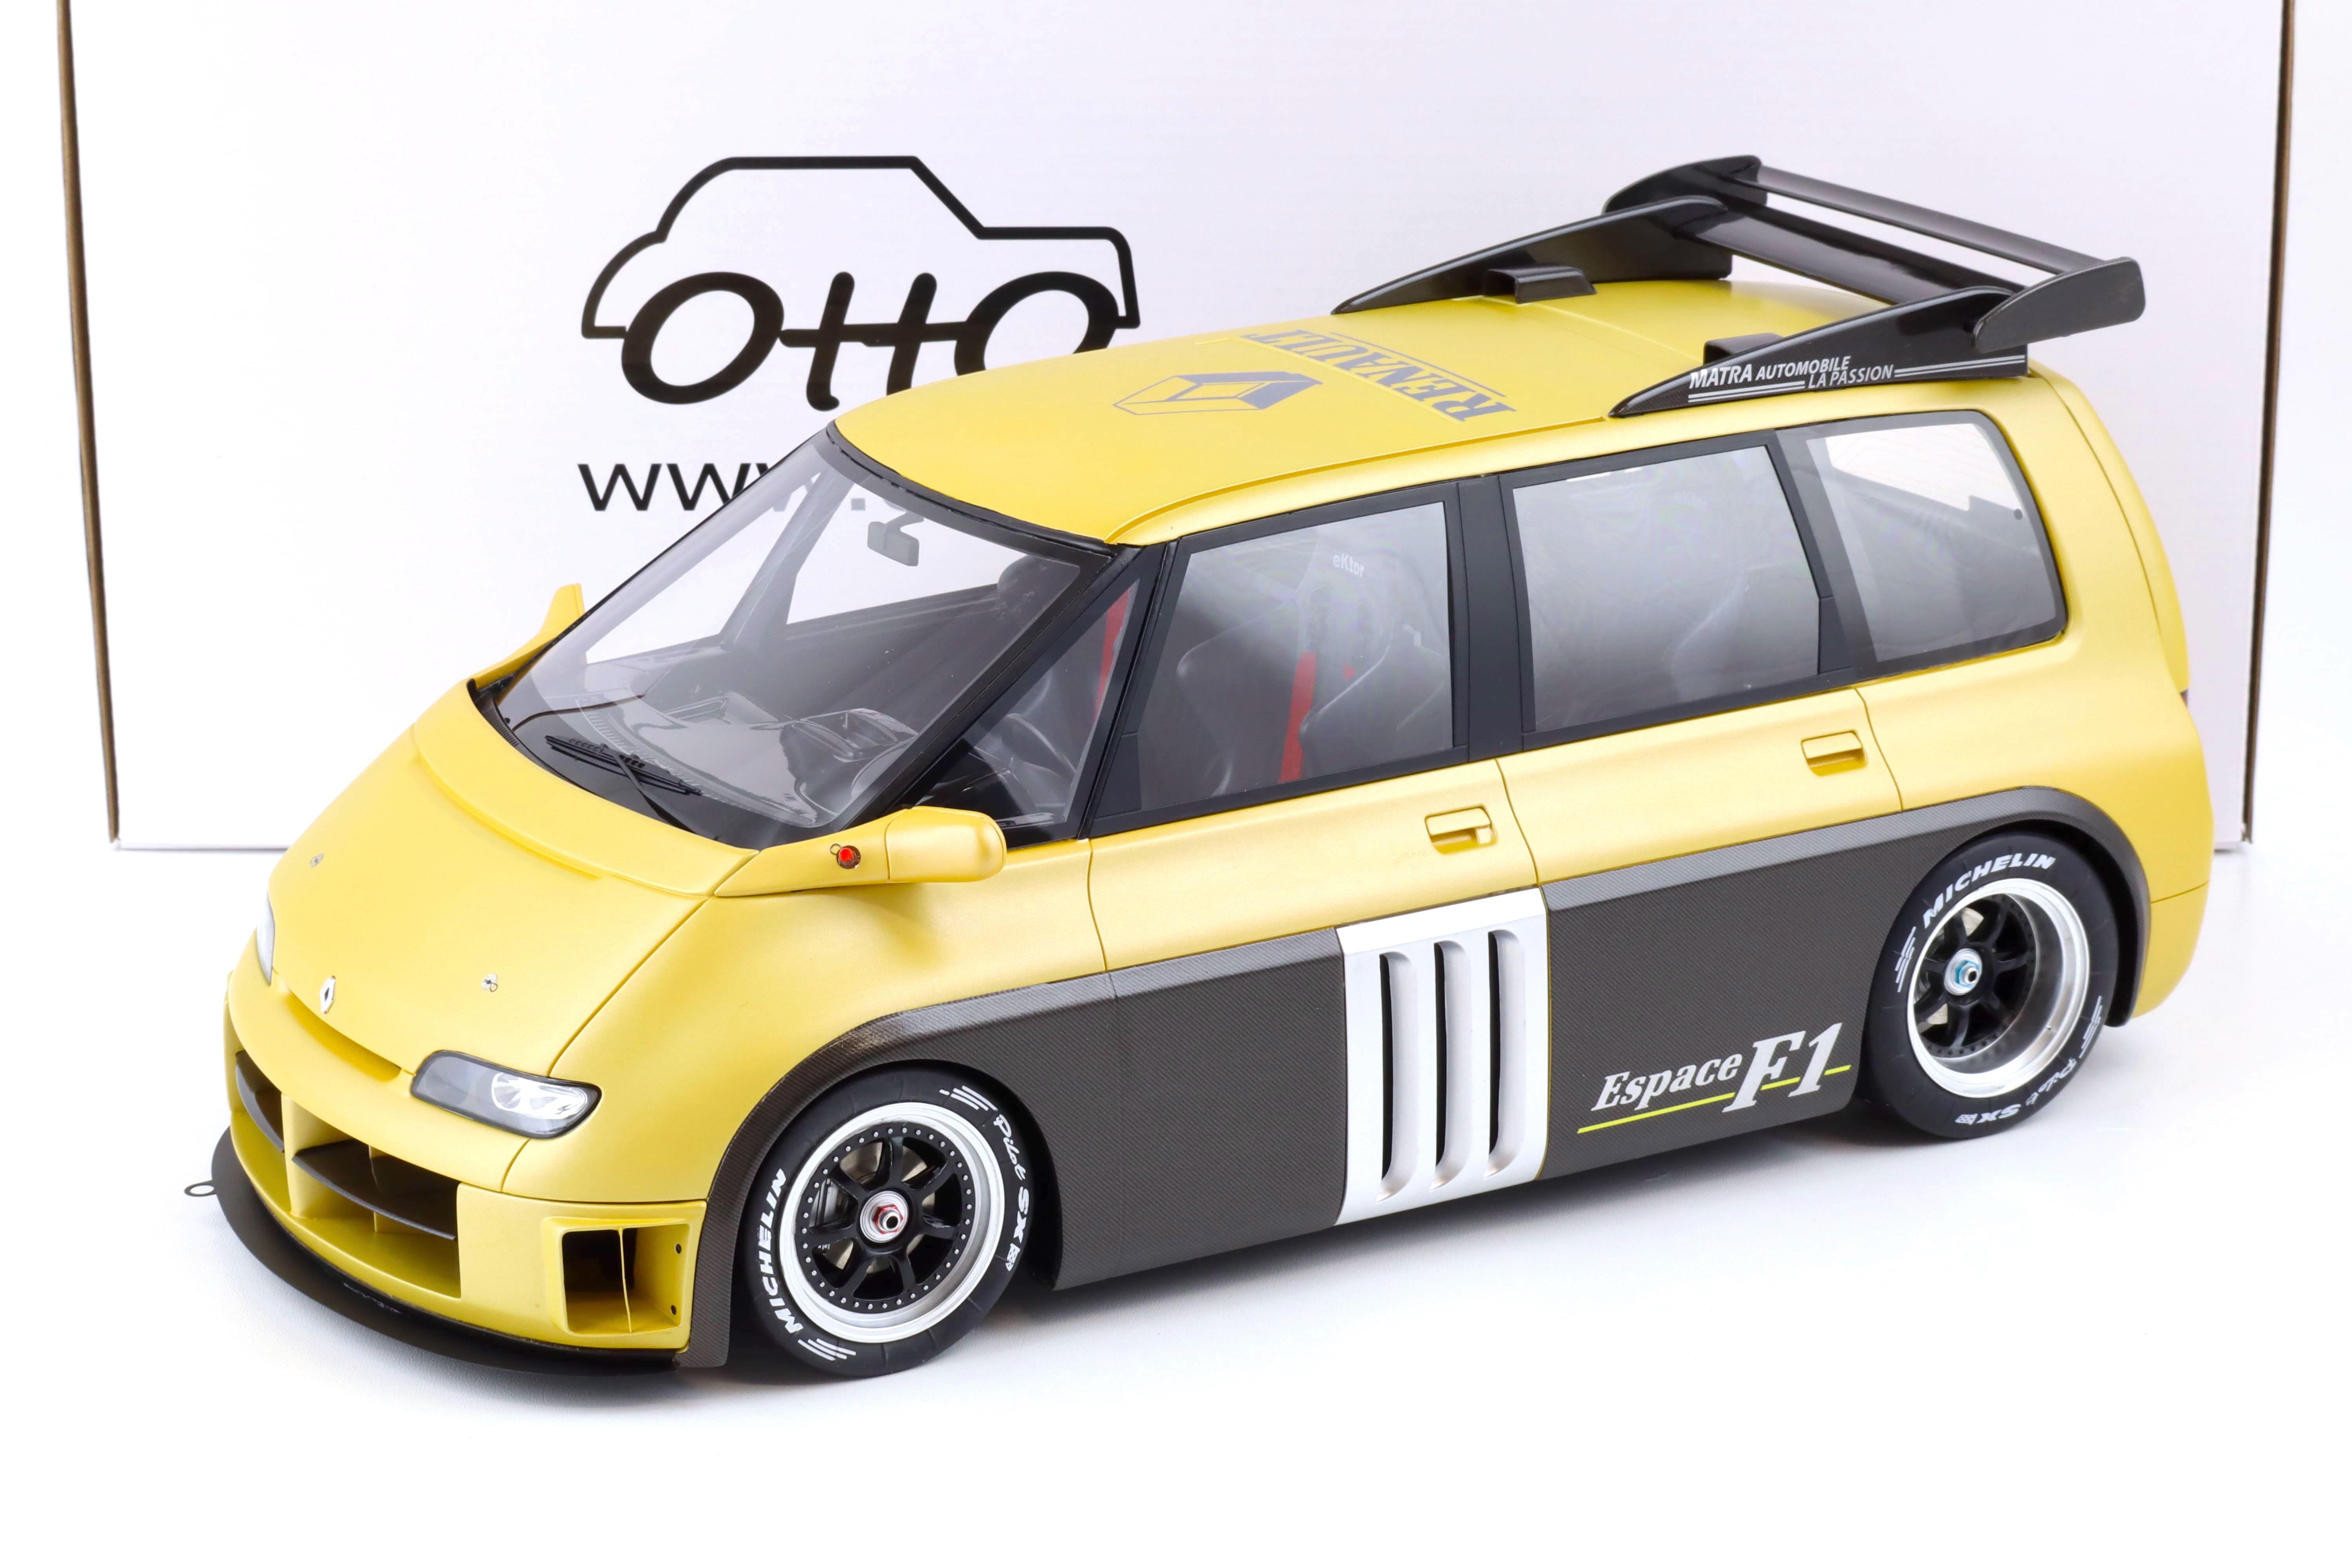 1:12 OTTO mobile G070 Renault Espace F1 matt yellow/ grey 1994